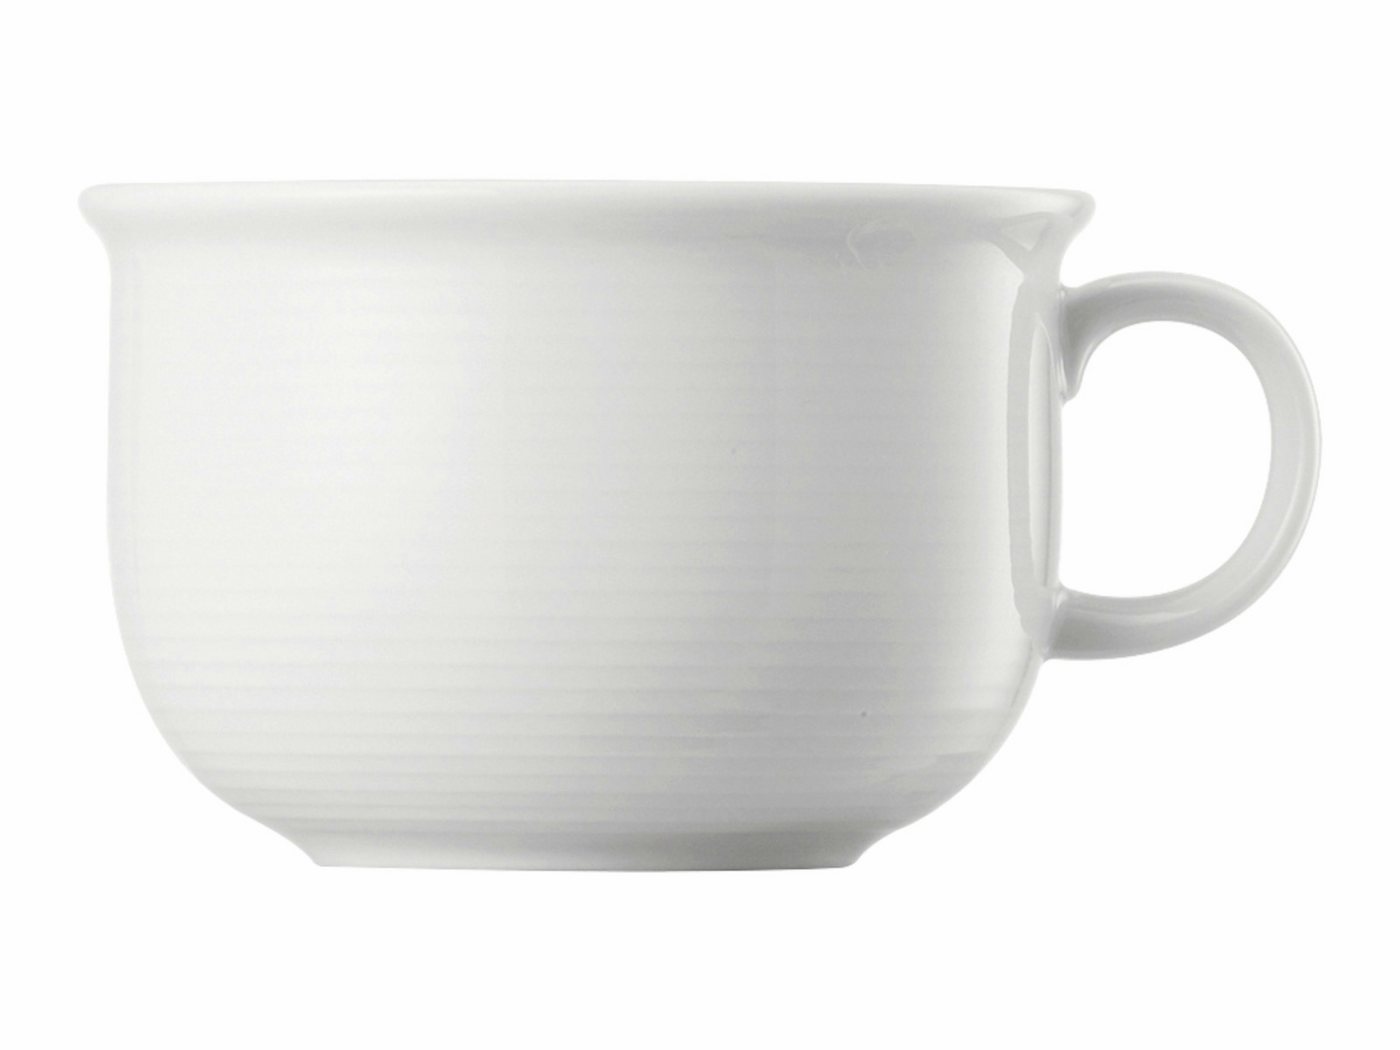 Thomas Porzellan Latte-Macchiato-Glas Trend weiss Frühstücks-Obertasse 0,4 l, Porzellan von Thomas Porzellan